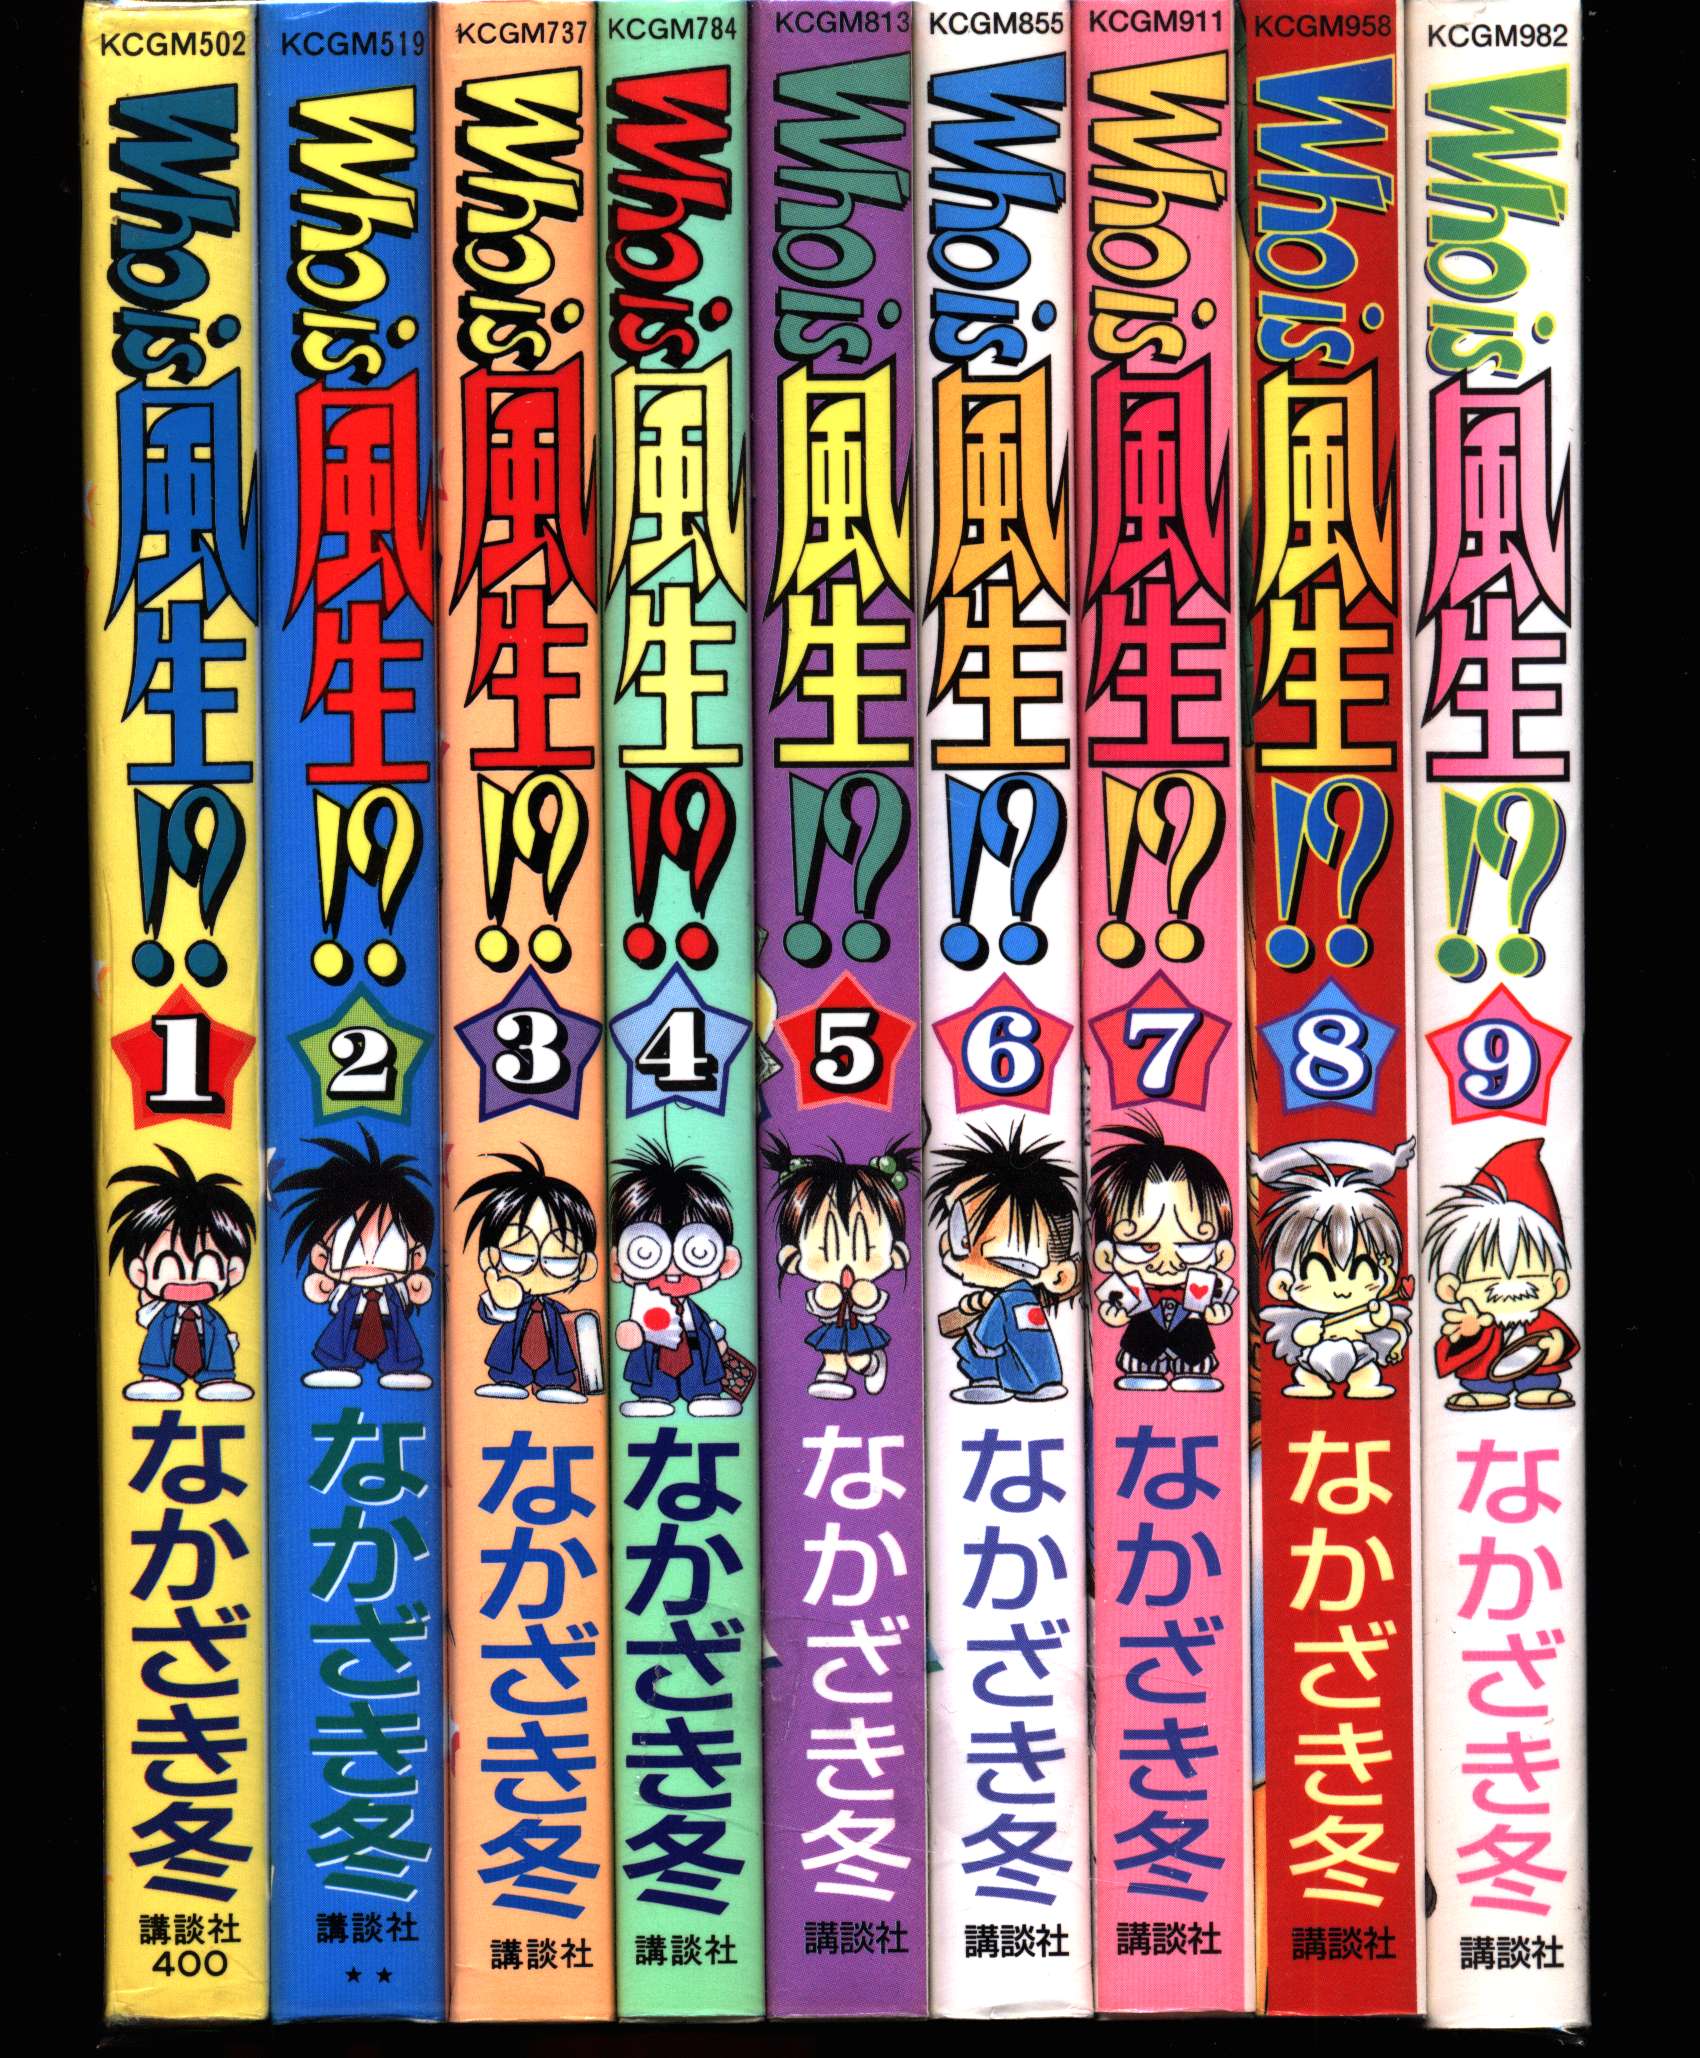 Kodansha Gekkan Magazine Kc Nakazakicho Winter Who Is Fusei Complete 9 Volume Set Mandarake Online Shop